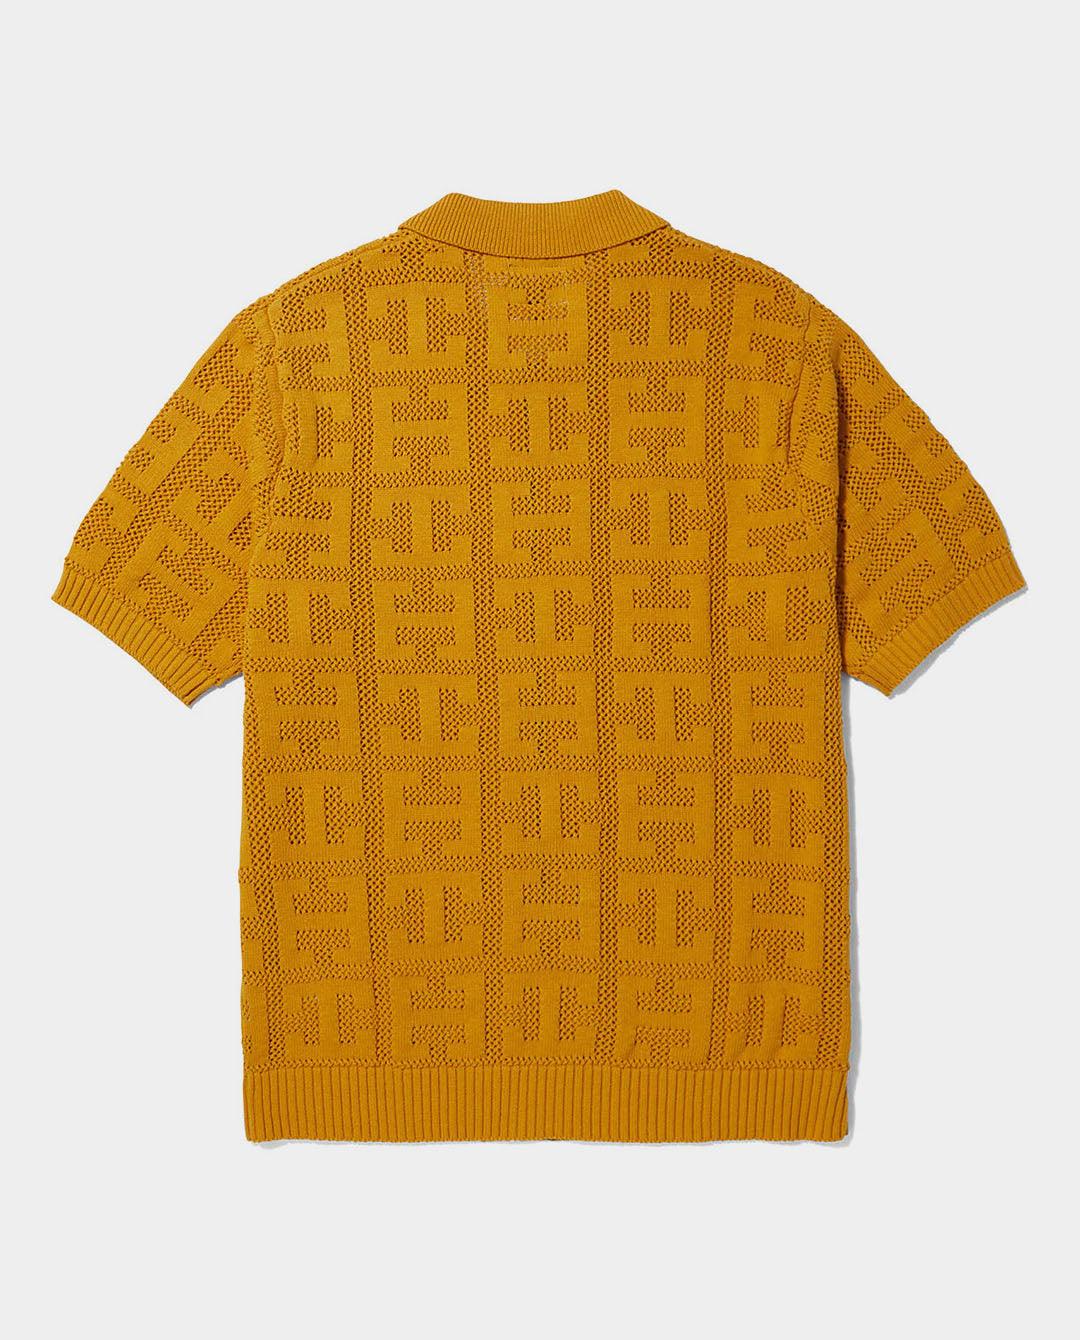 Huf - Monogram Jacquard Zip Sweater - Dijon Shirts HUF   